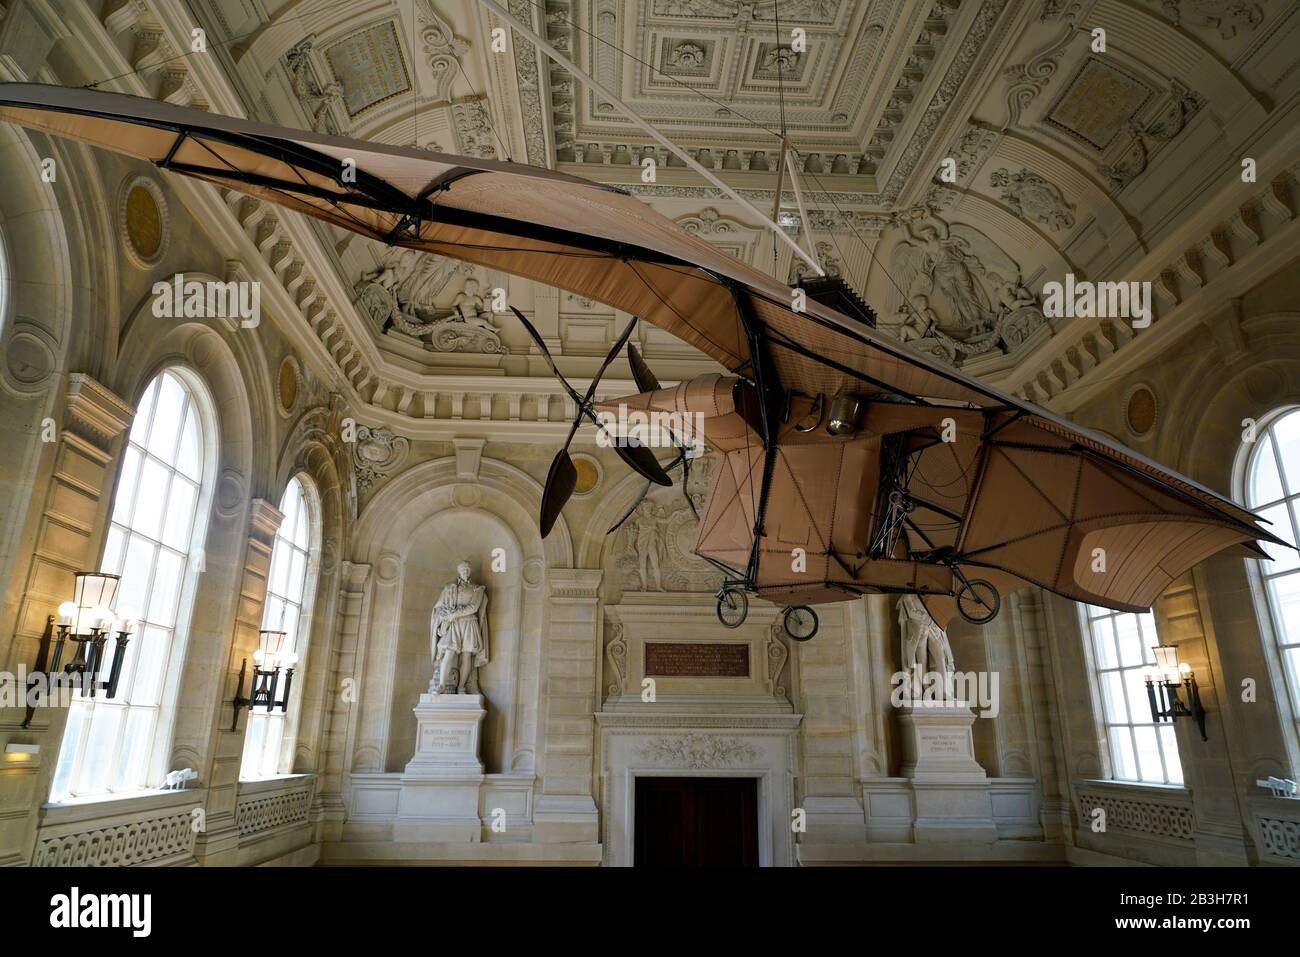 L'originale aereo Clément Ader's Avion III espone al Musée des Arts et Métiers.Paris.France. Foto Stock